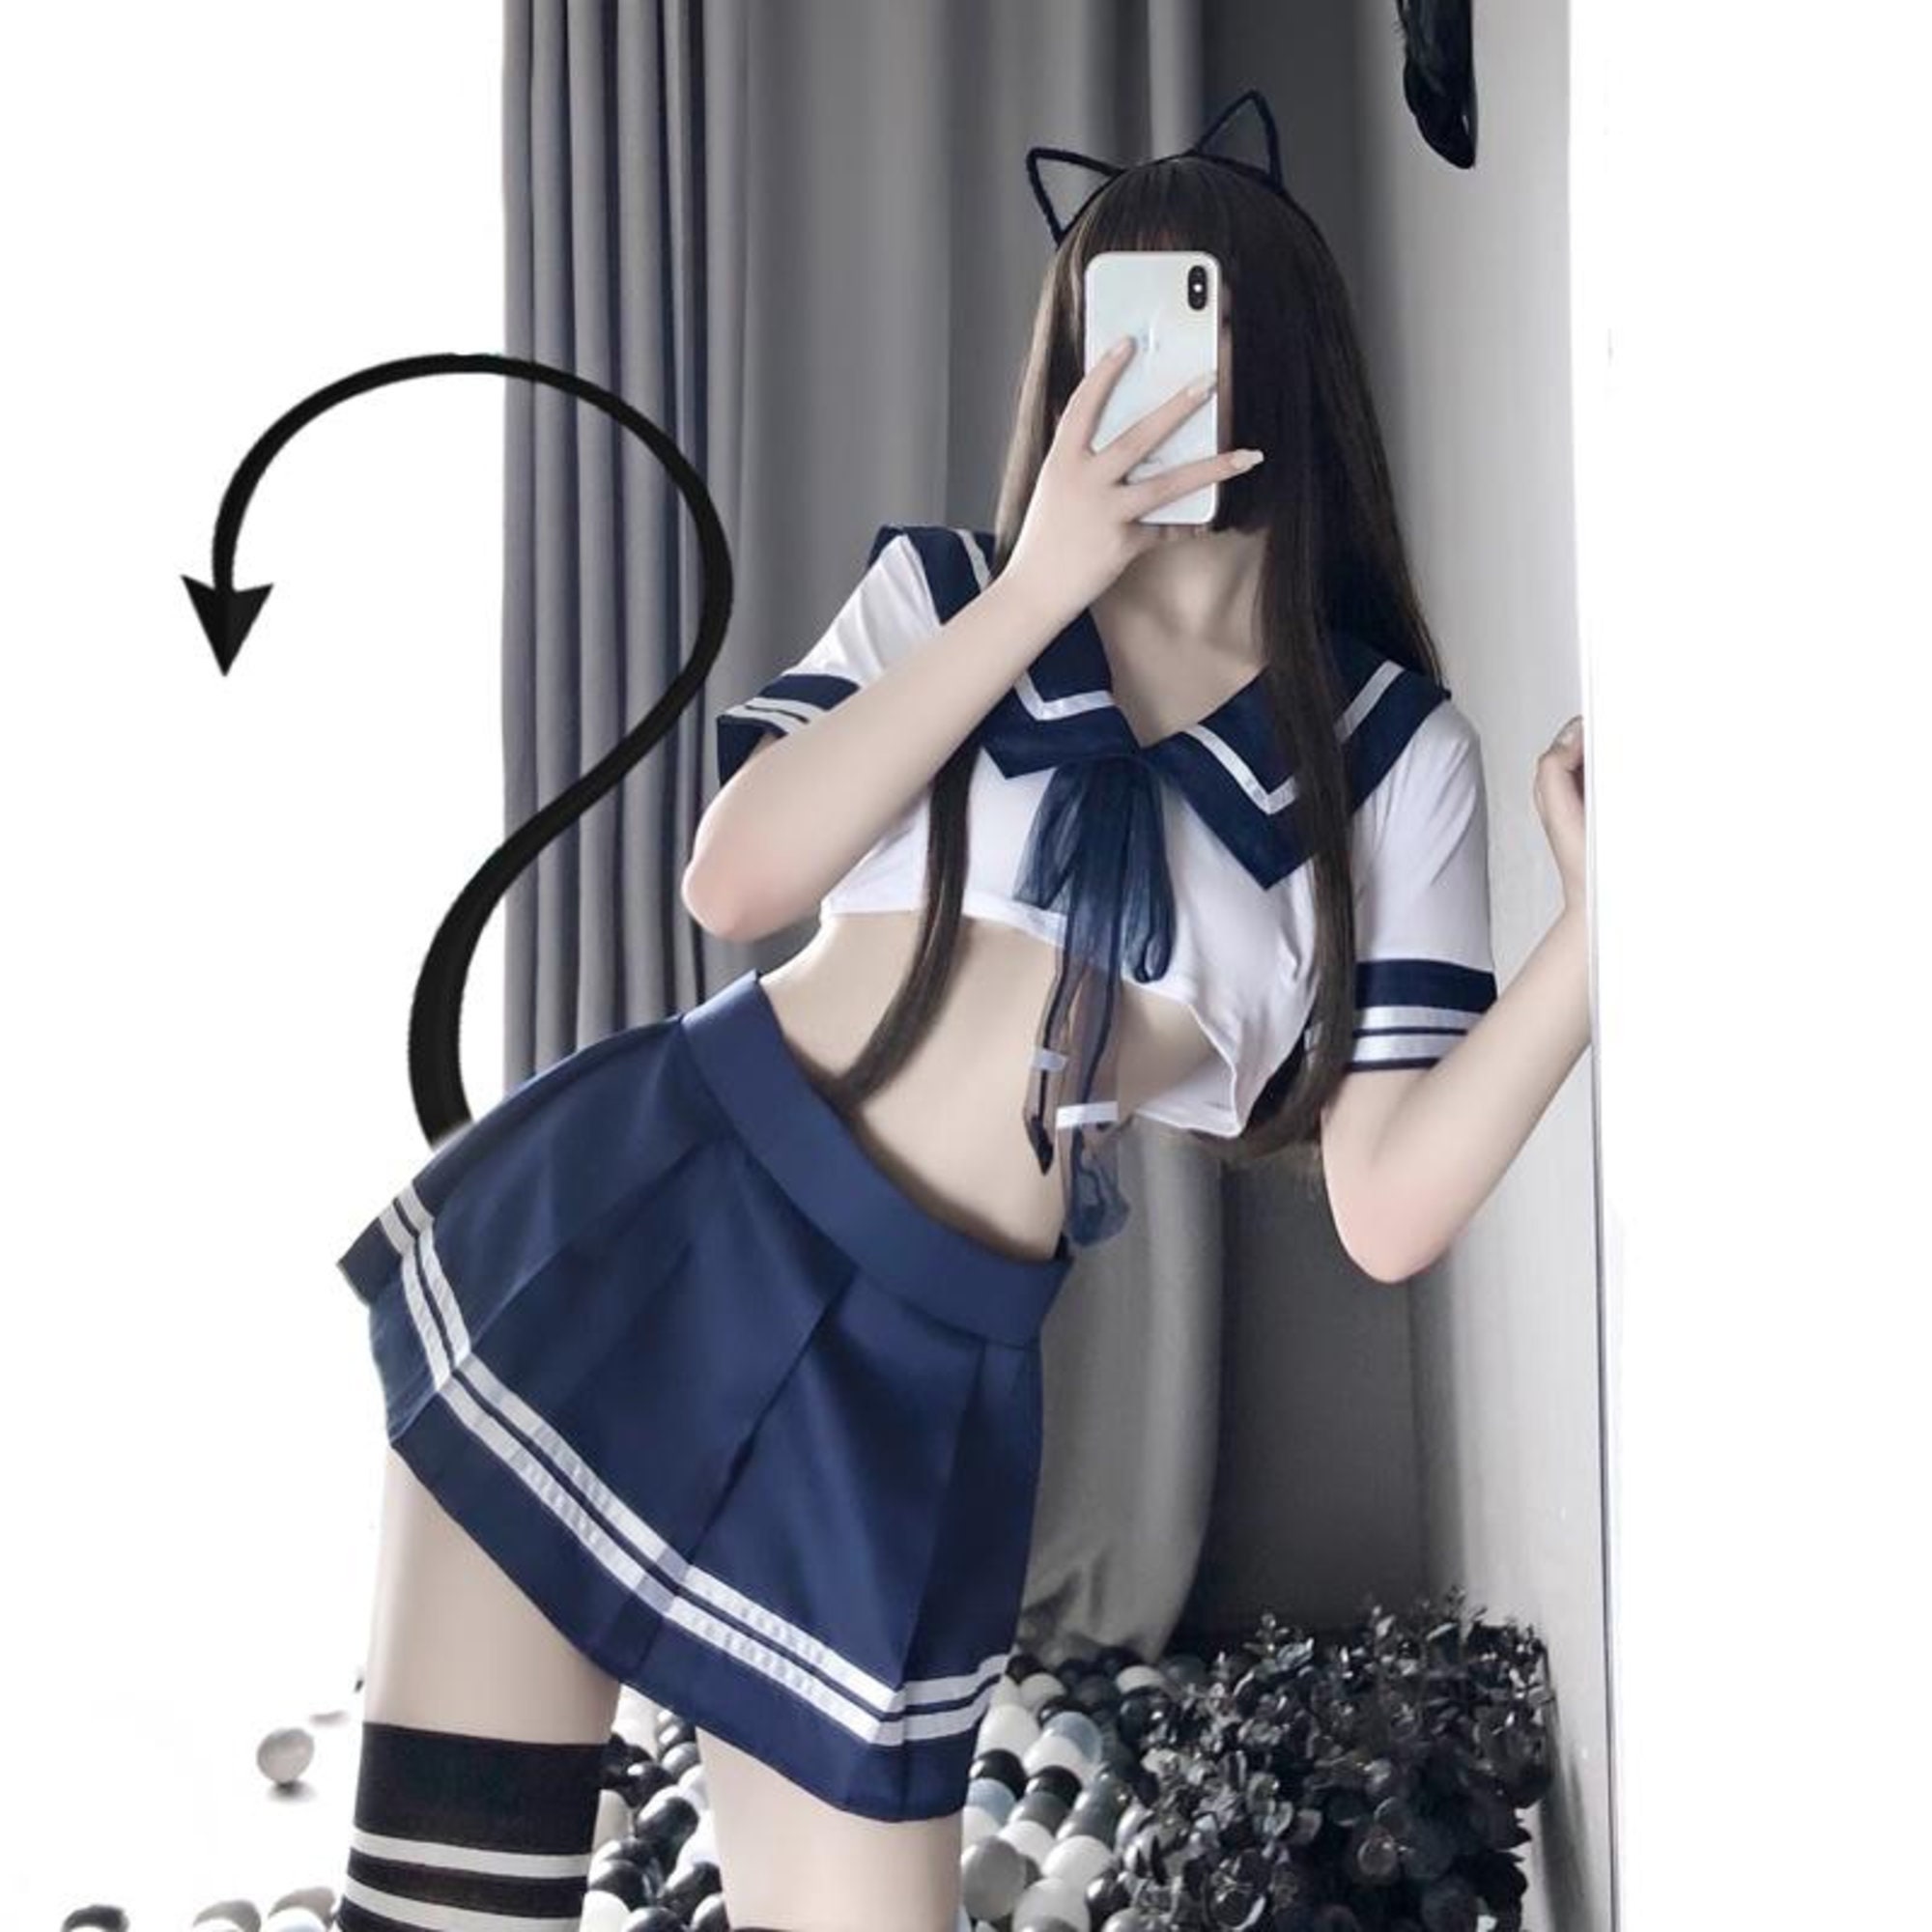 Skinny Schoolgirl Uniform Porn - Women Sexy Cosplay Anime School Girl Japanese With Miniskirt - Etsy